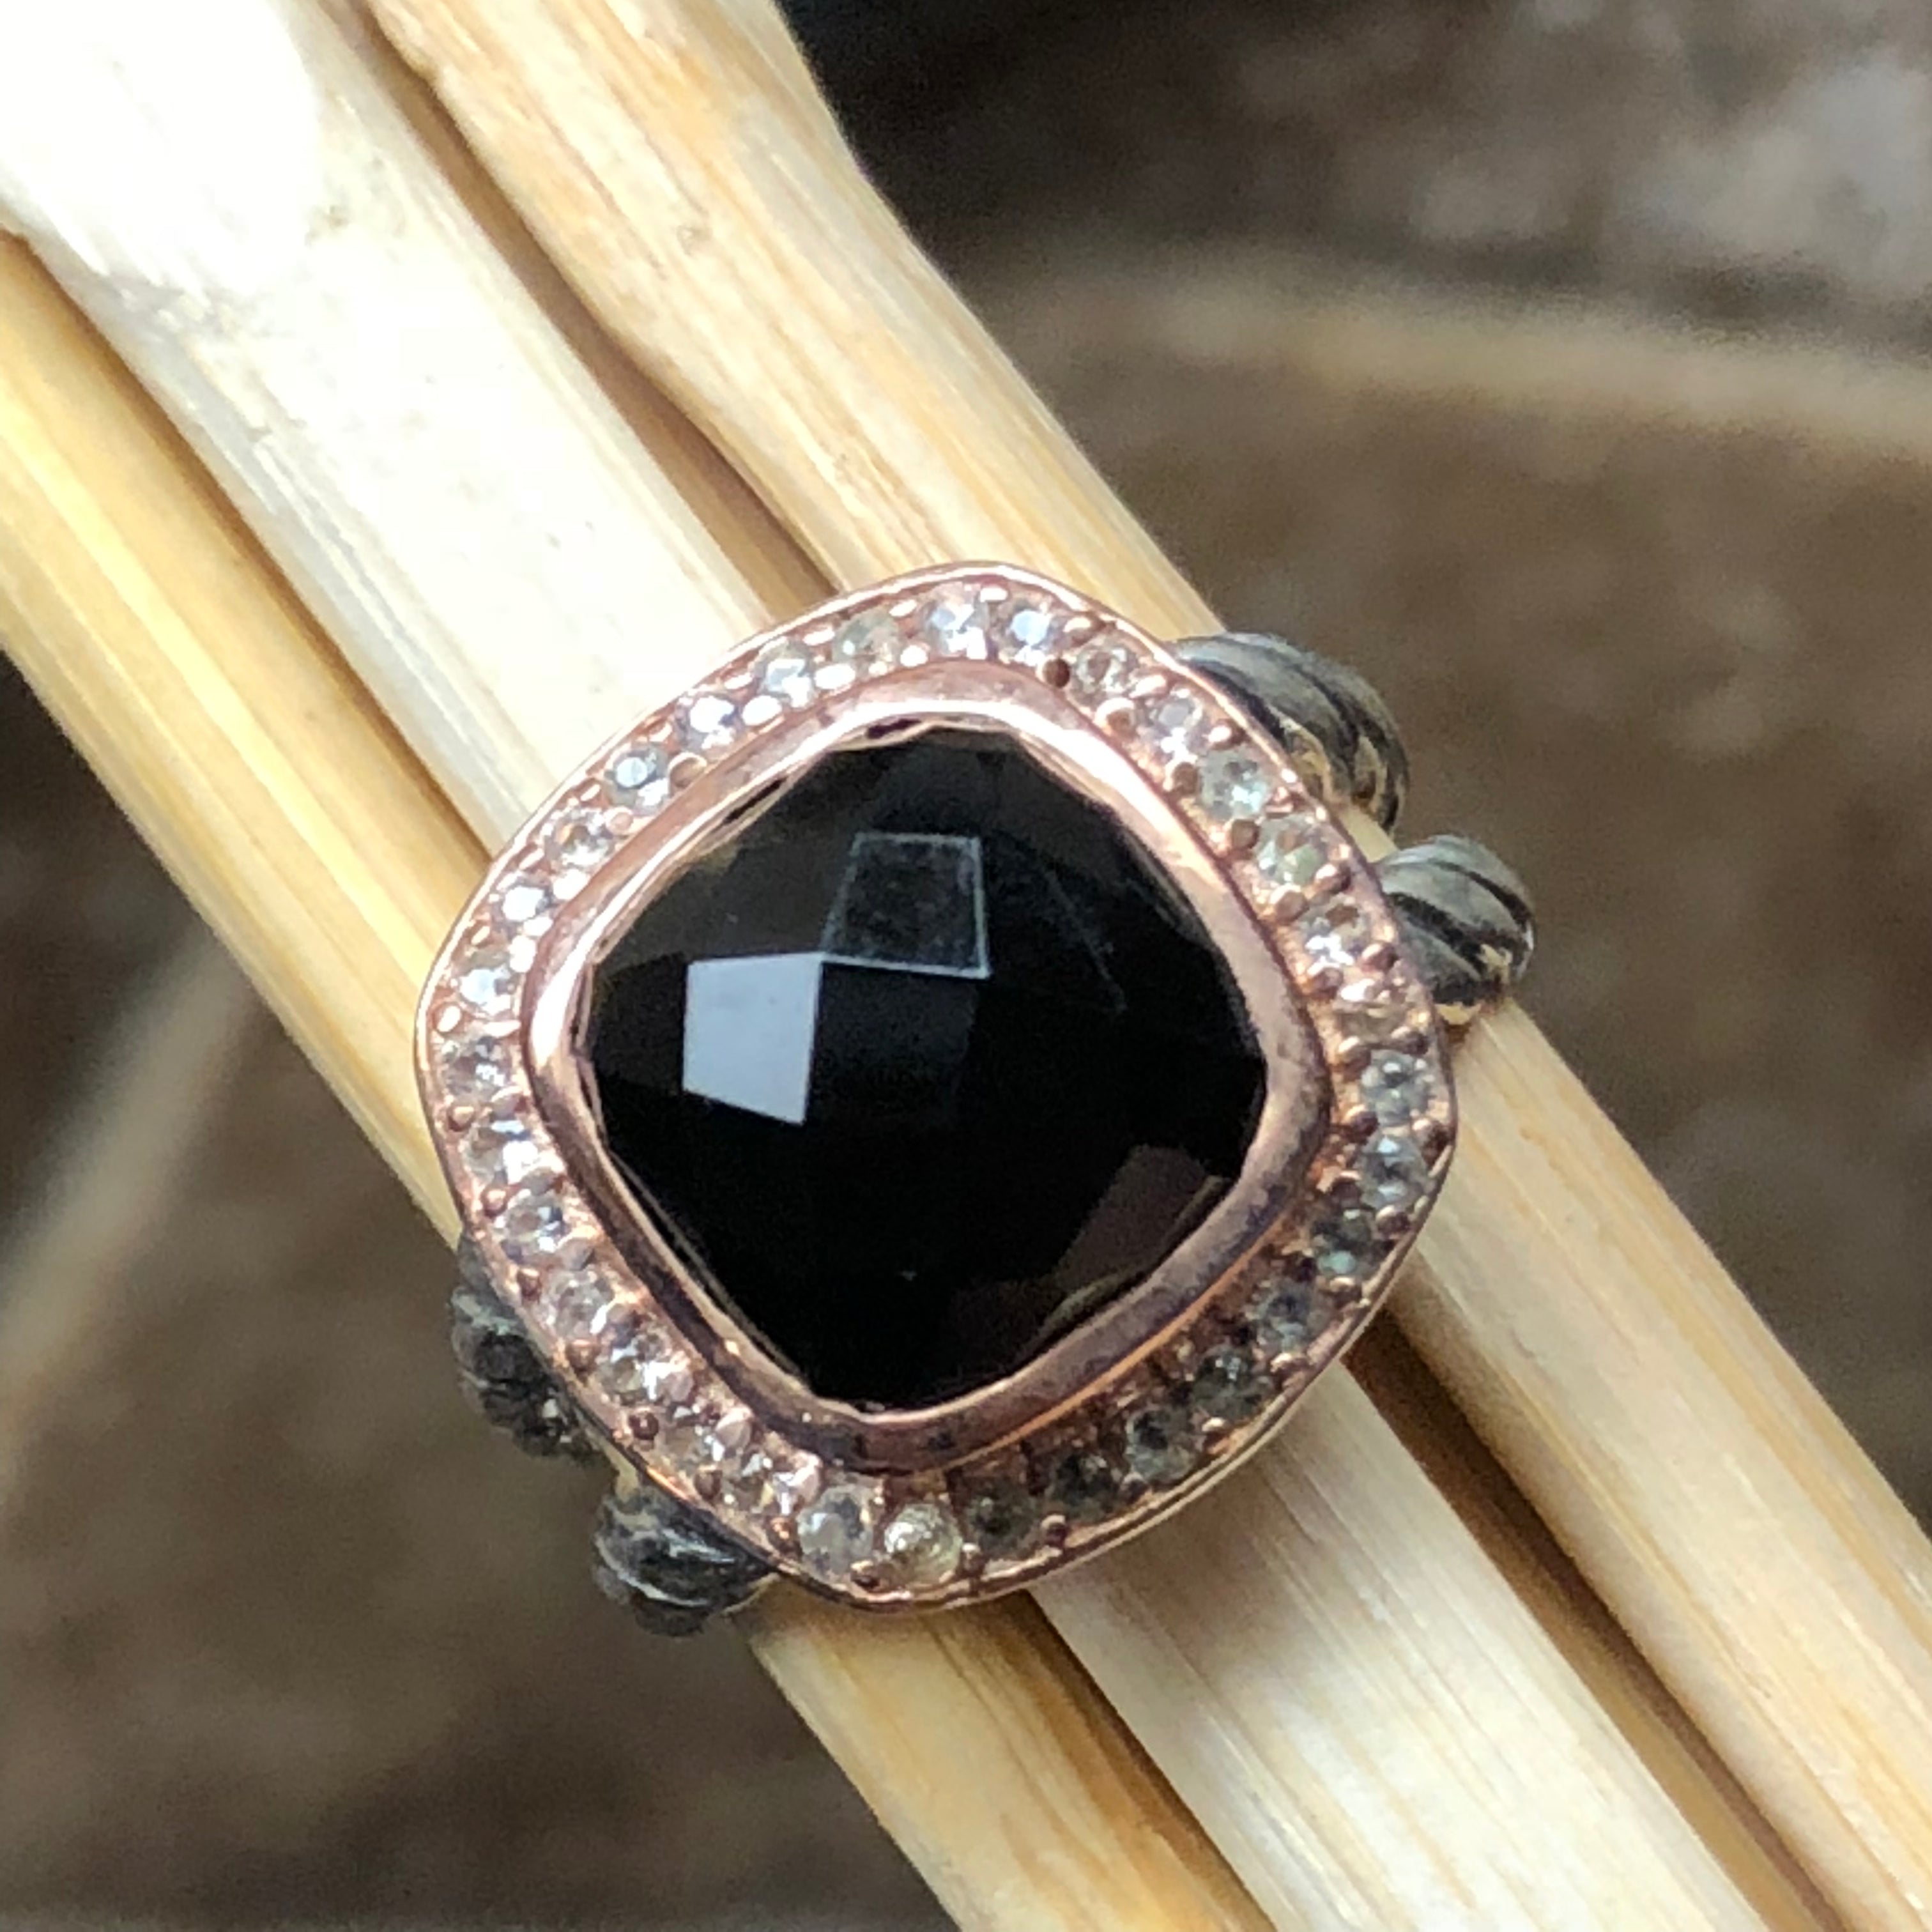 Genuine Black Onyx 14k Rose Gold, 925 Solid Sterling Silver Engagement Ring Size 6, 7, 8, 9 - Natural Rocks by Kala